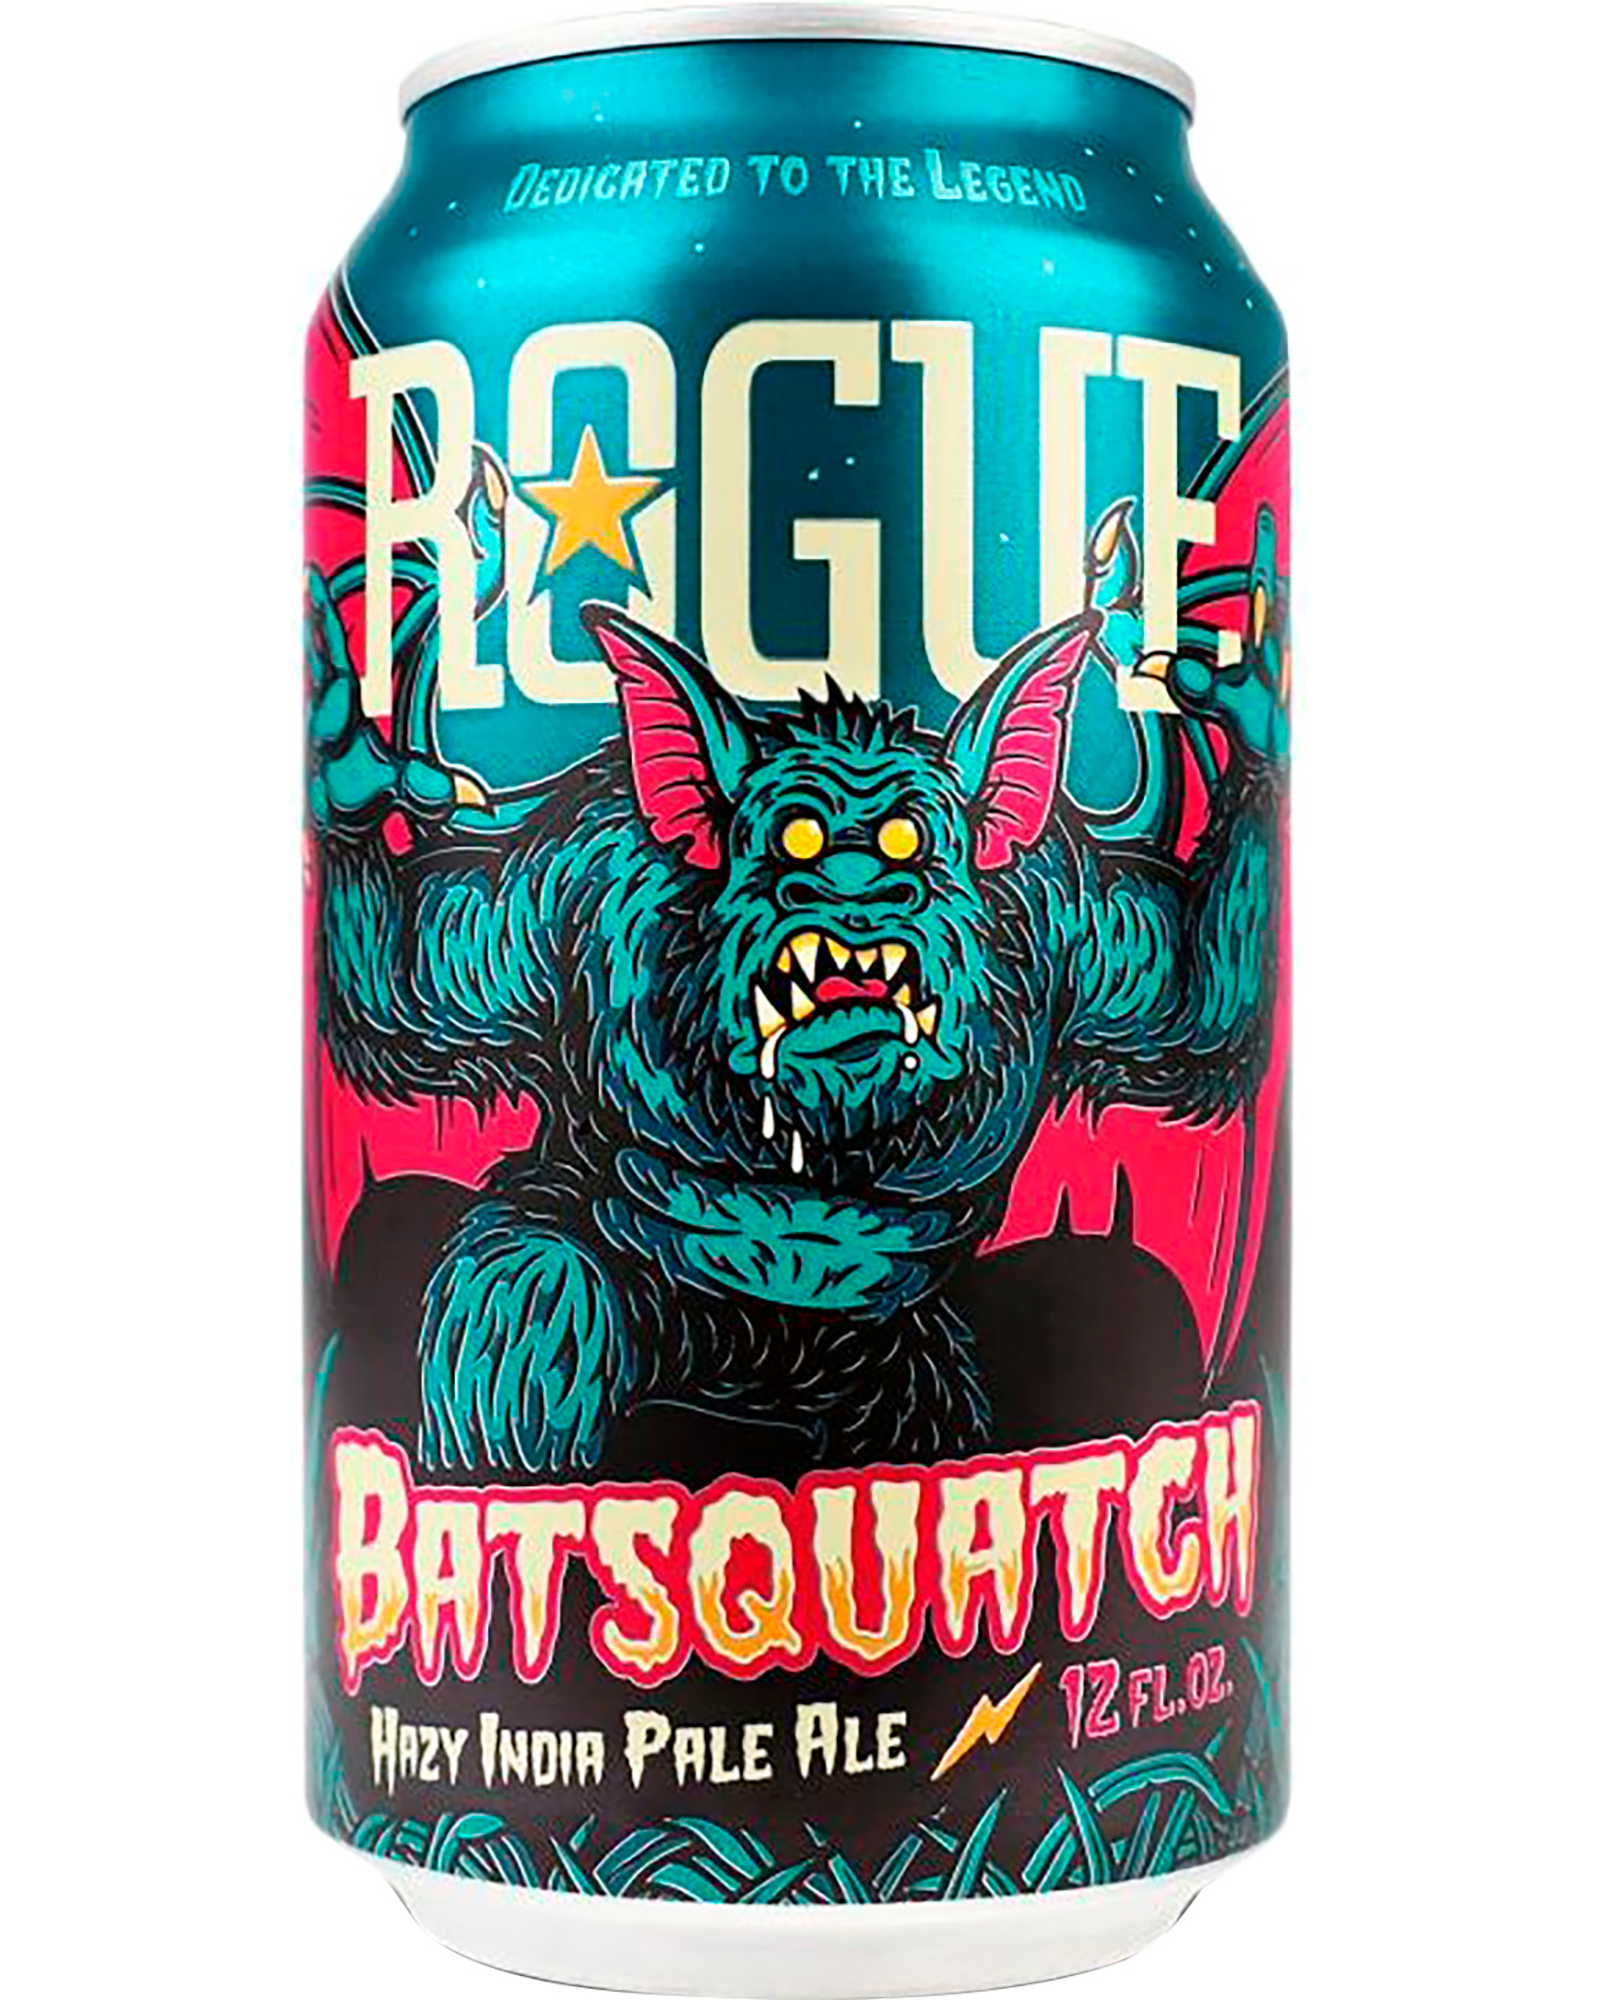 Rogue Batsquatch Hazy India Pale Ale can